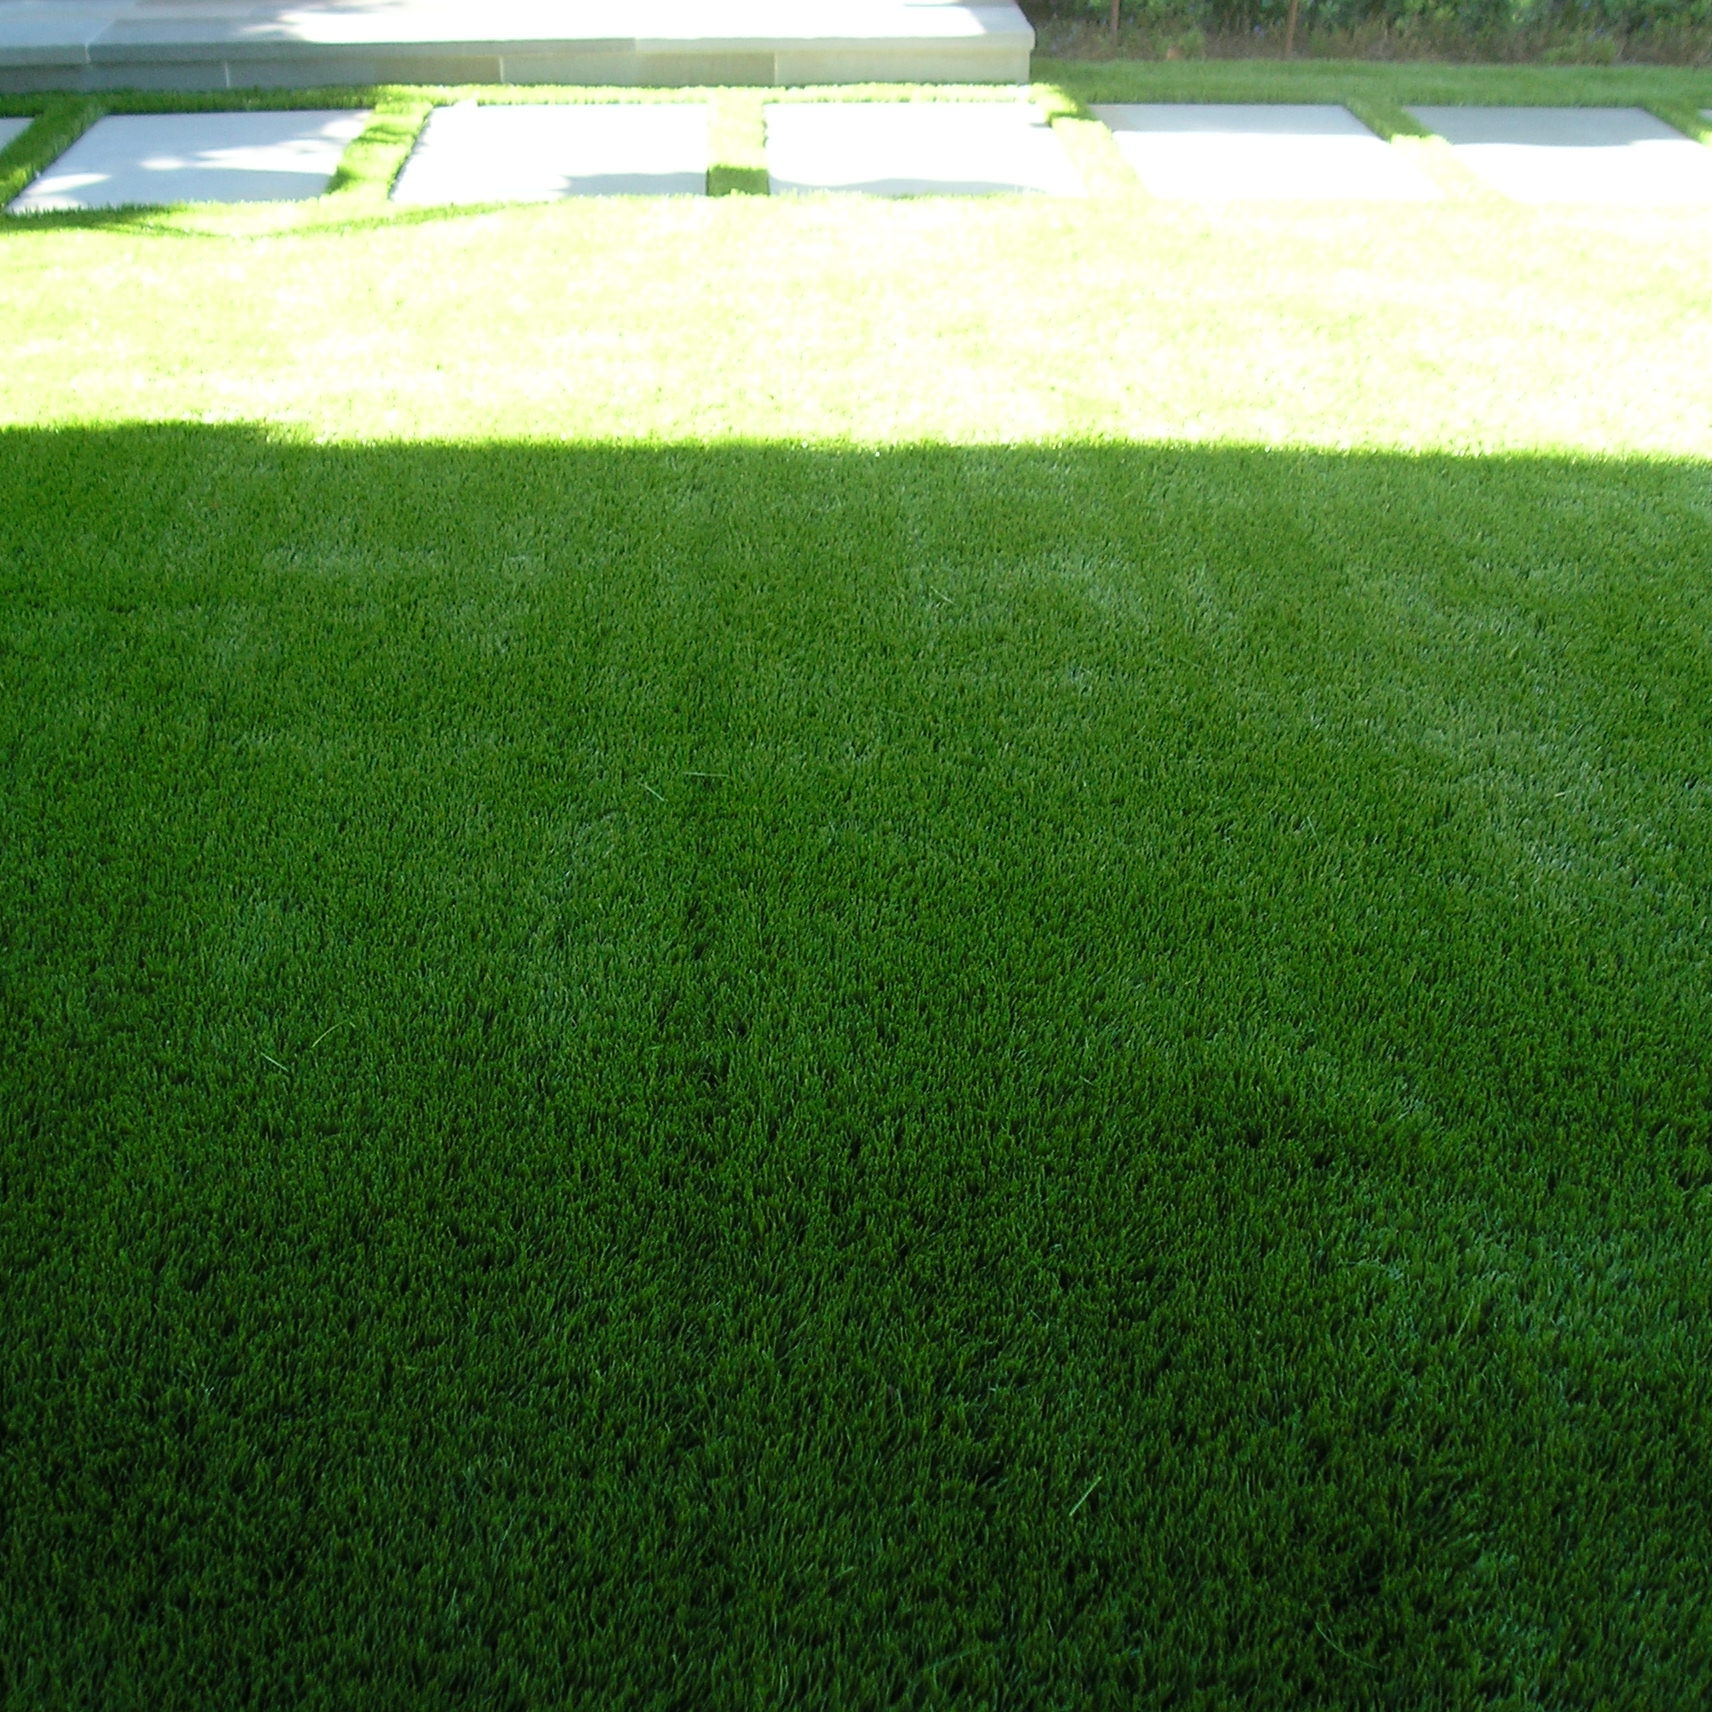 Super Natural 60 fake grass,fake grass for yard,fake lawn,fake grass carpet,fake turf,artificial grass,fake grass,synthetic grass,grass carpet,artificial grass rug